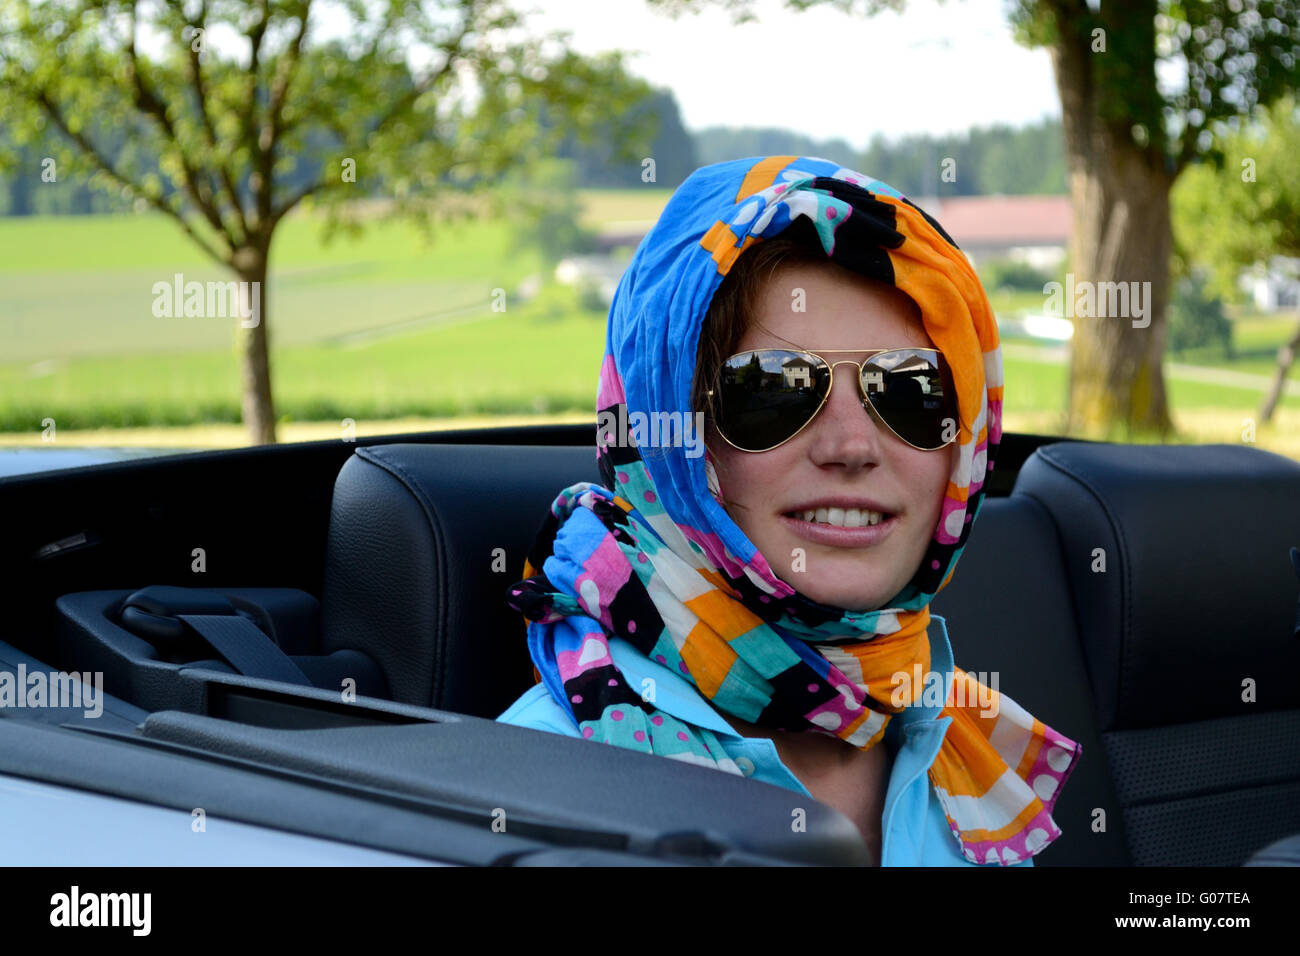 Woman scarf cabriolet -Fotos und -Bildmaterial in hoher Auflösung – Alamy